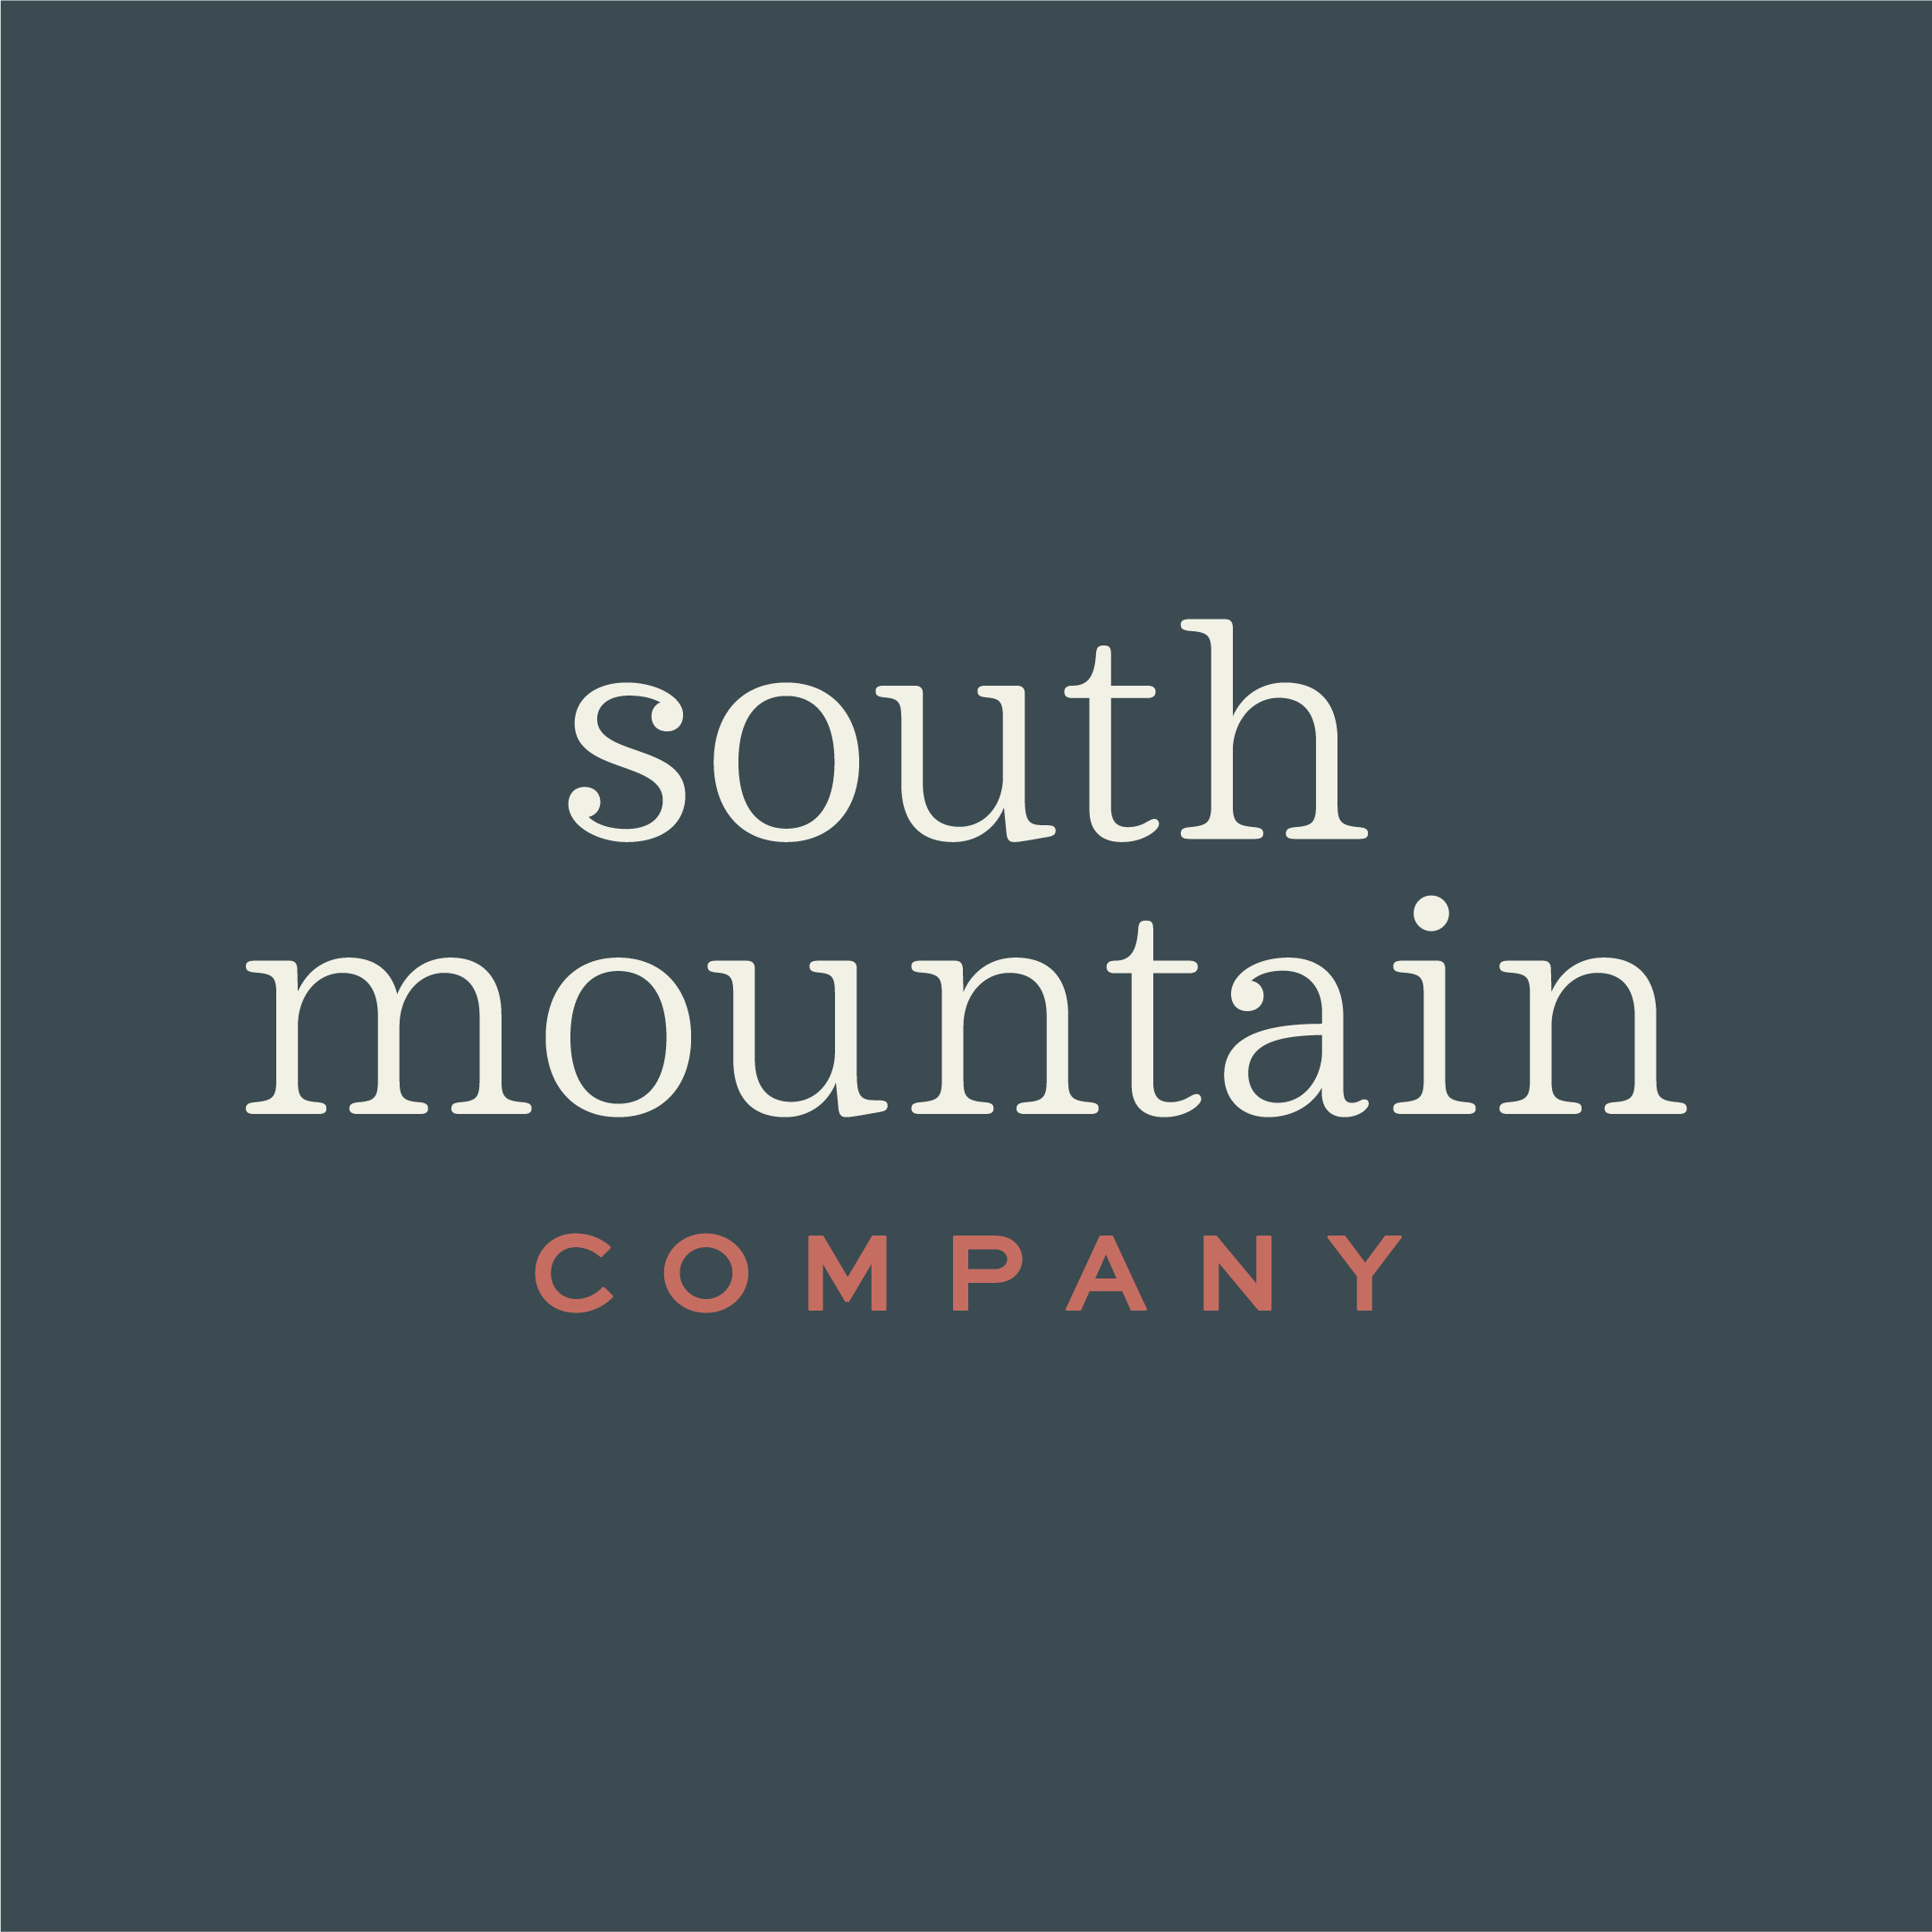 South Mountain Company jobs